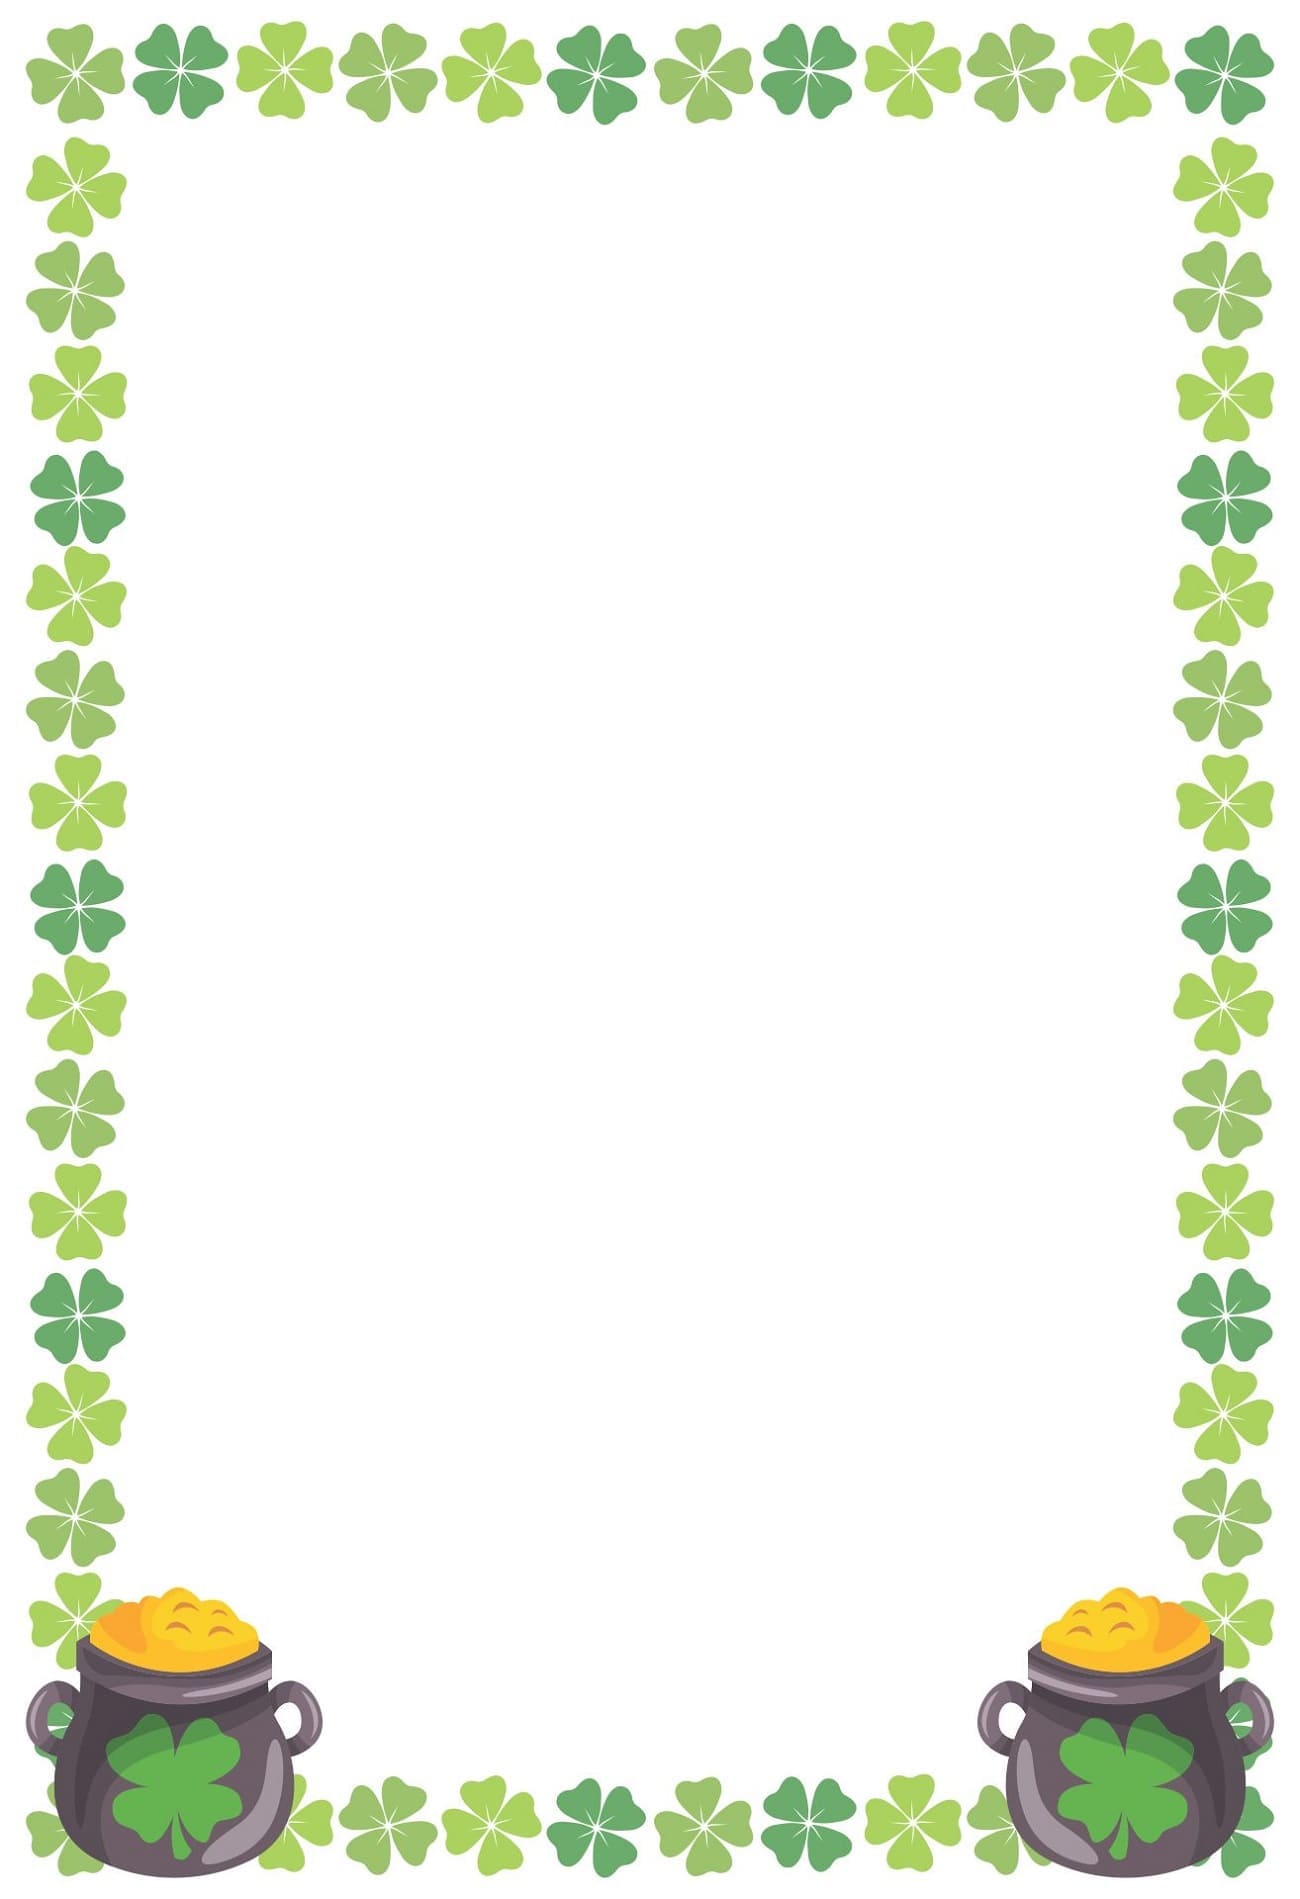 Printable Saint Patrick's Day Border Image